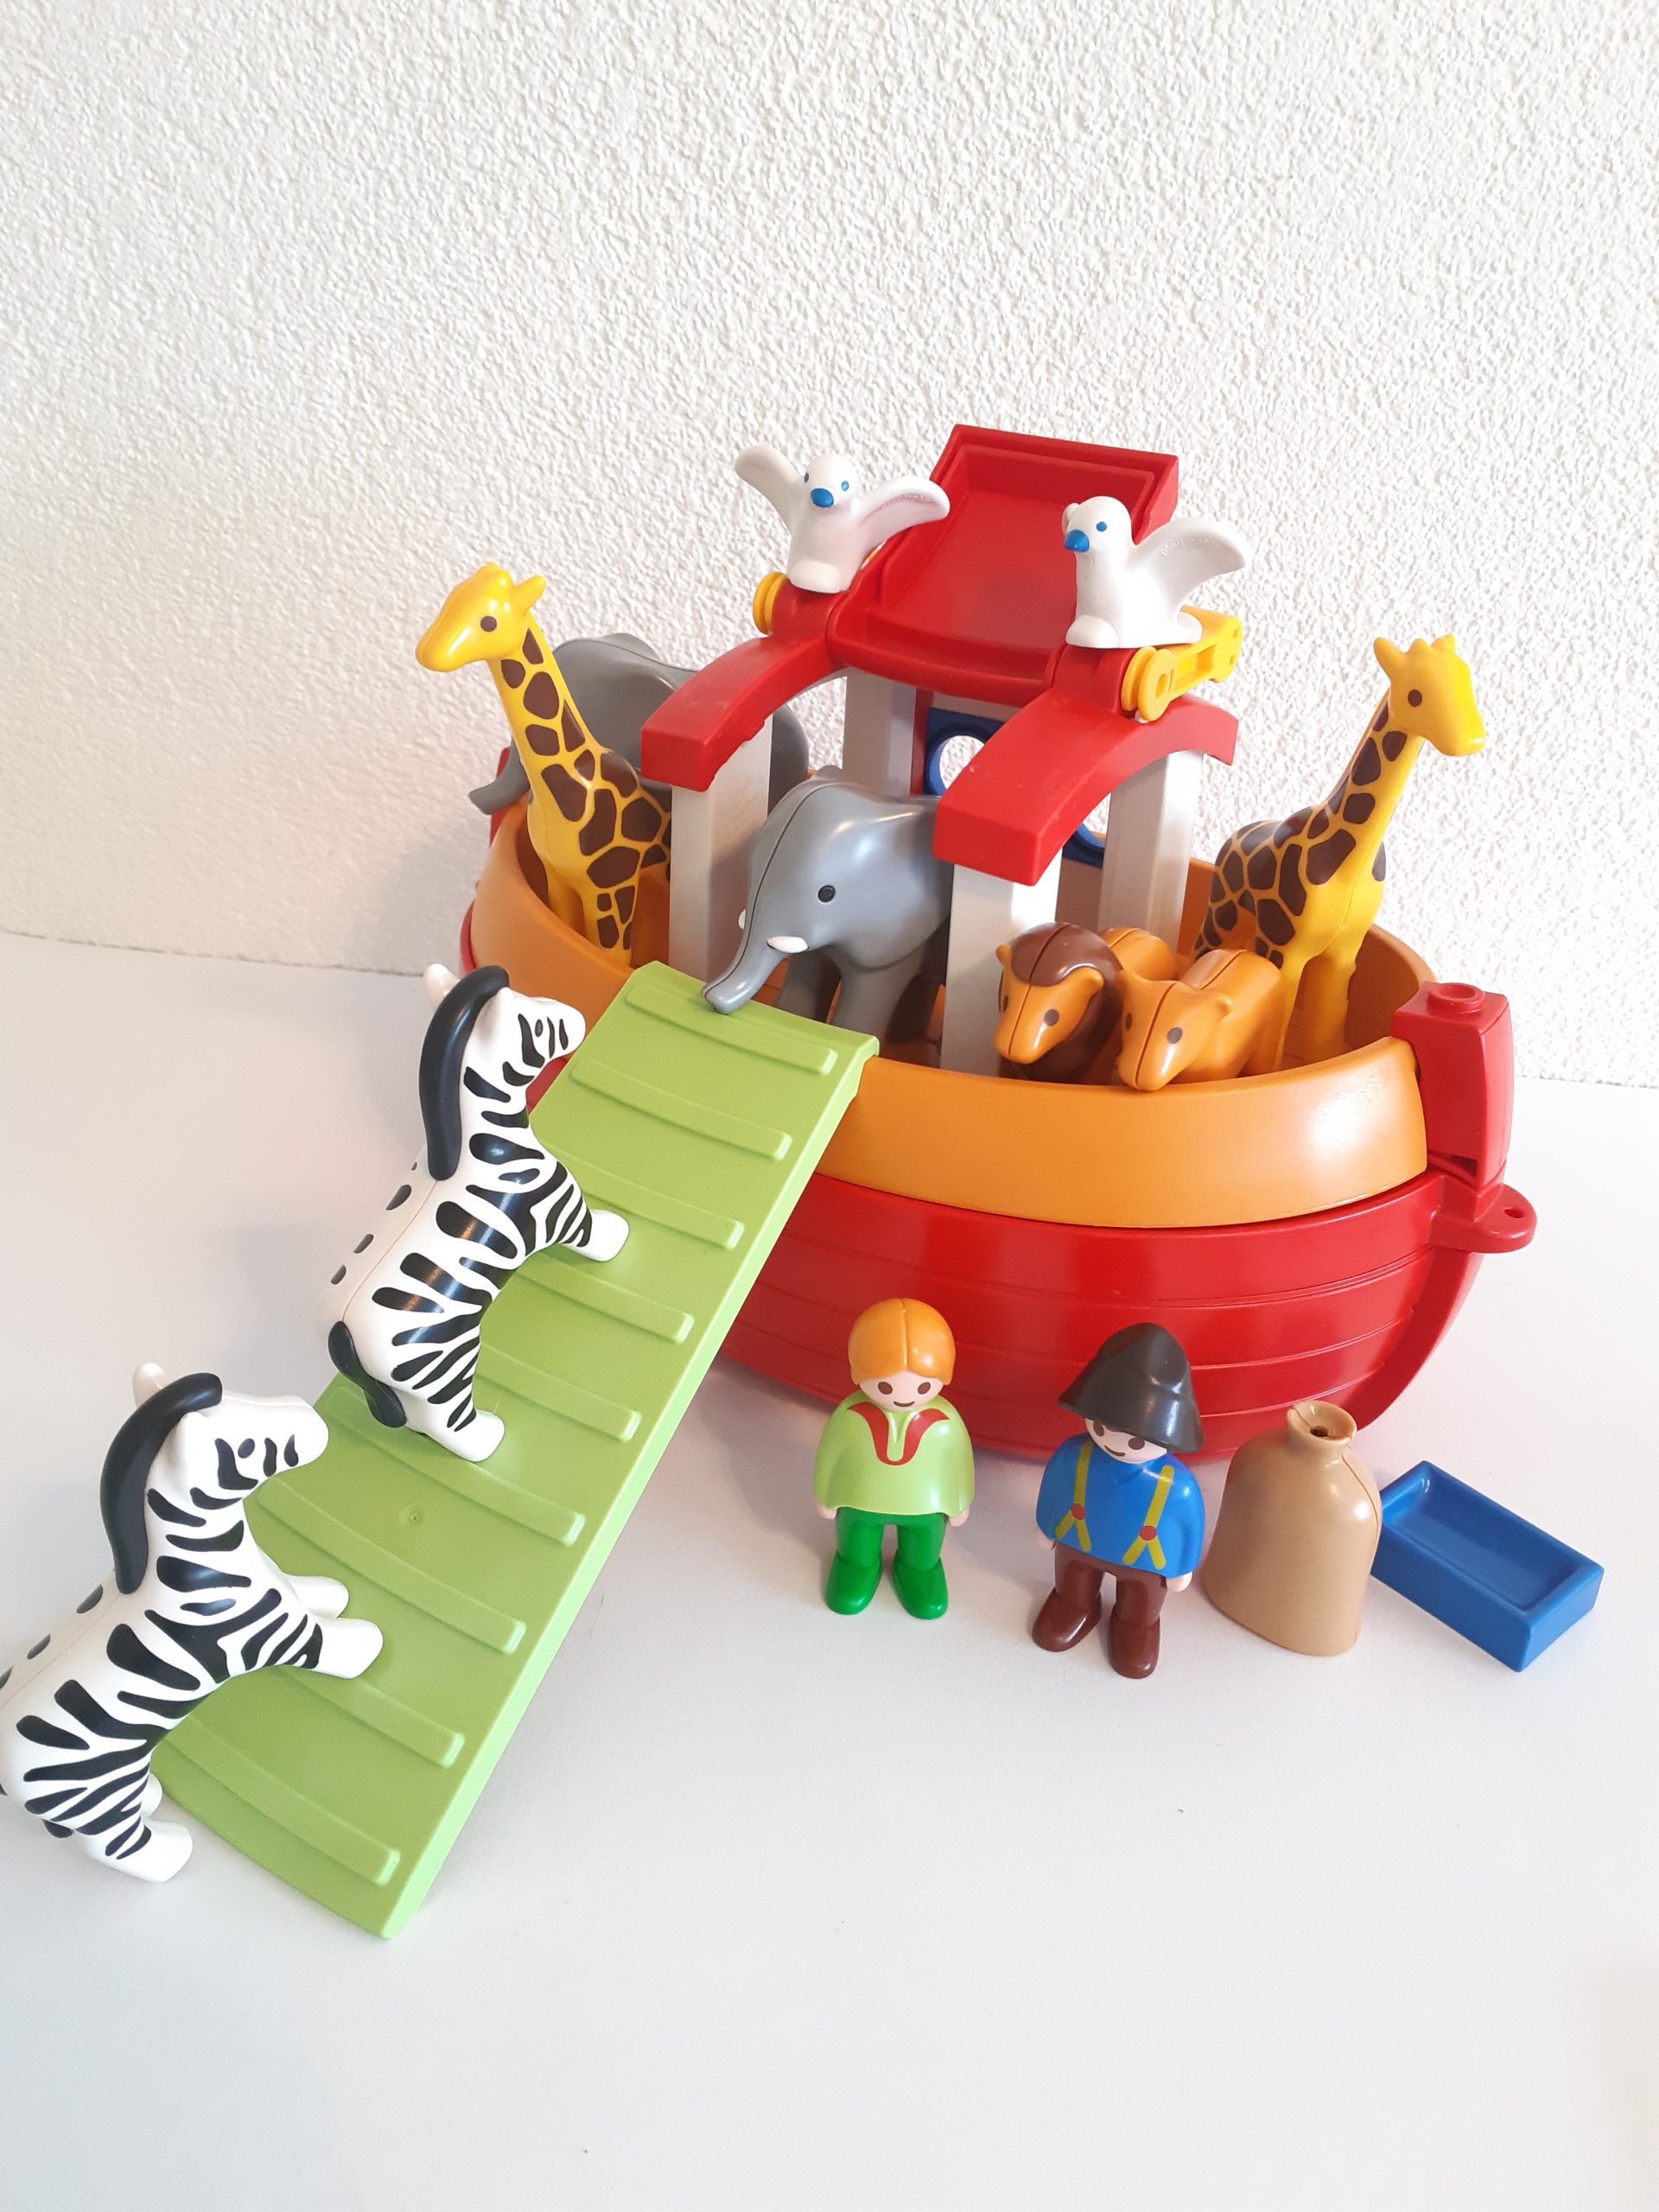 Playmobil ark van Noach - Speel-o-Theek Hillegom